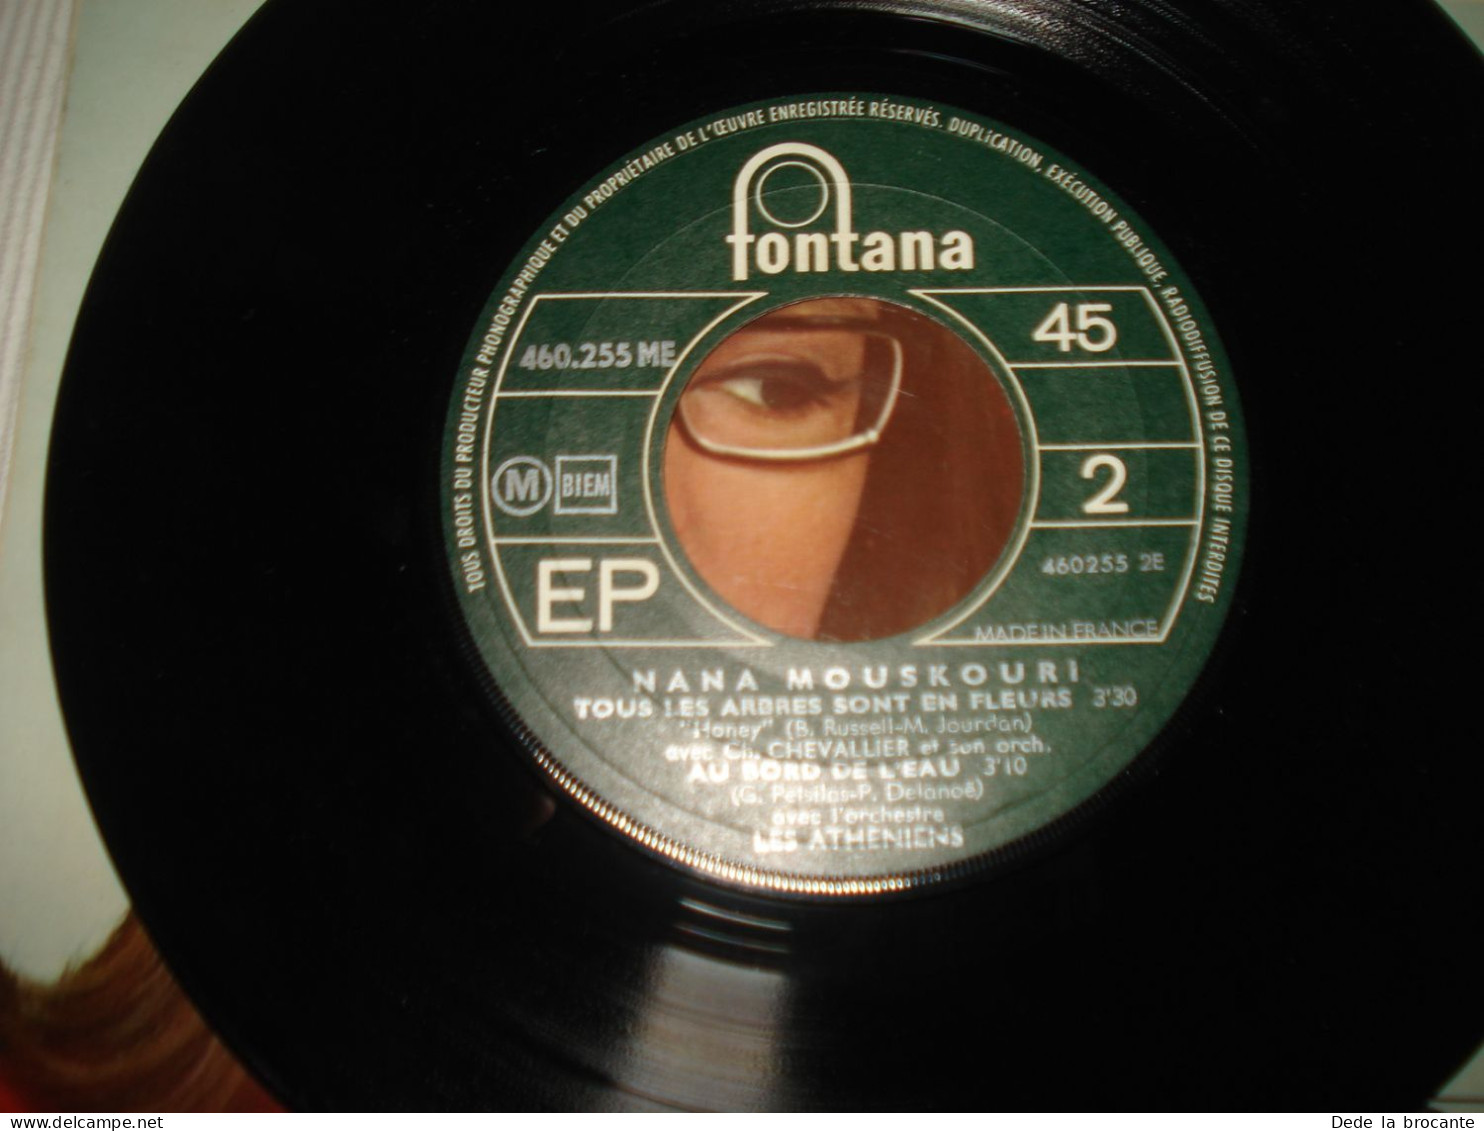 B13 / Nana Mouskouri – Coucourou Paloma - EP – 460 255 ME - Fr 1968  NM/NM - Special Formats